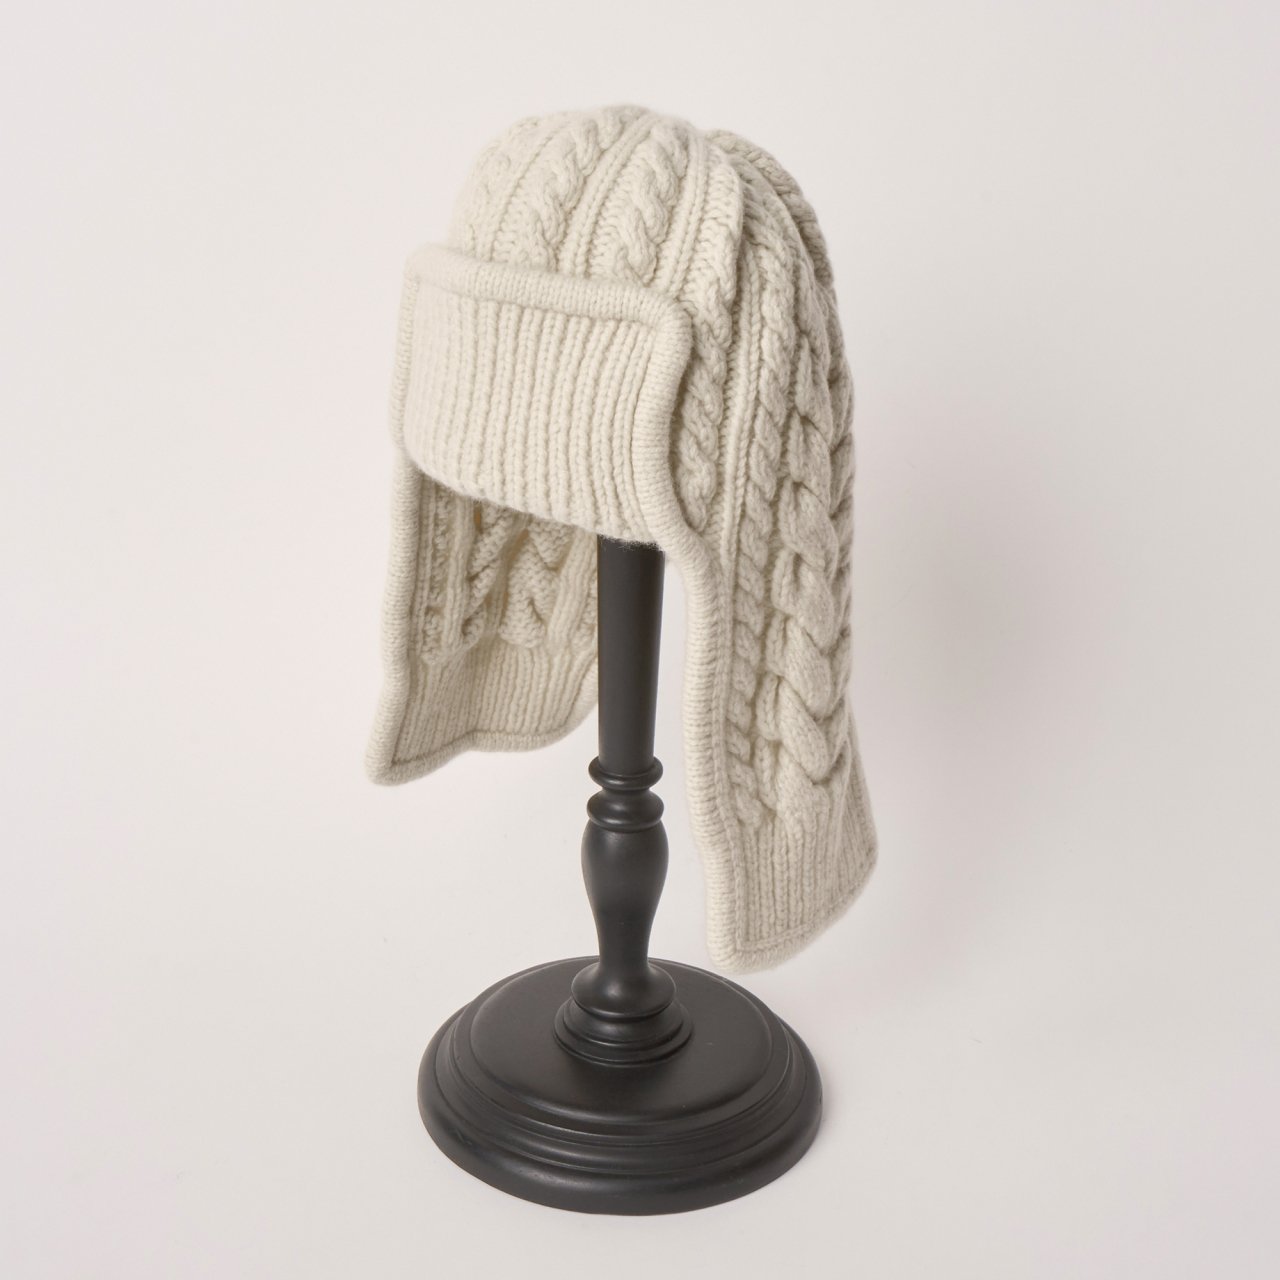 üca <BR> aran hand-knit fright cap <BR> white